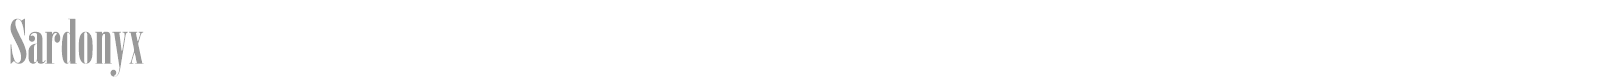 Font Sardonyx